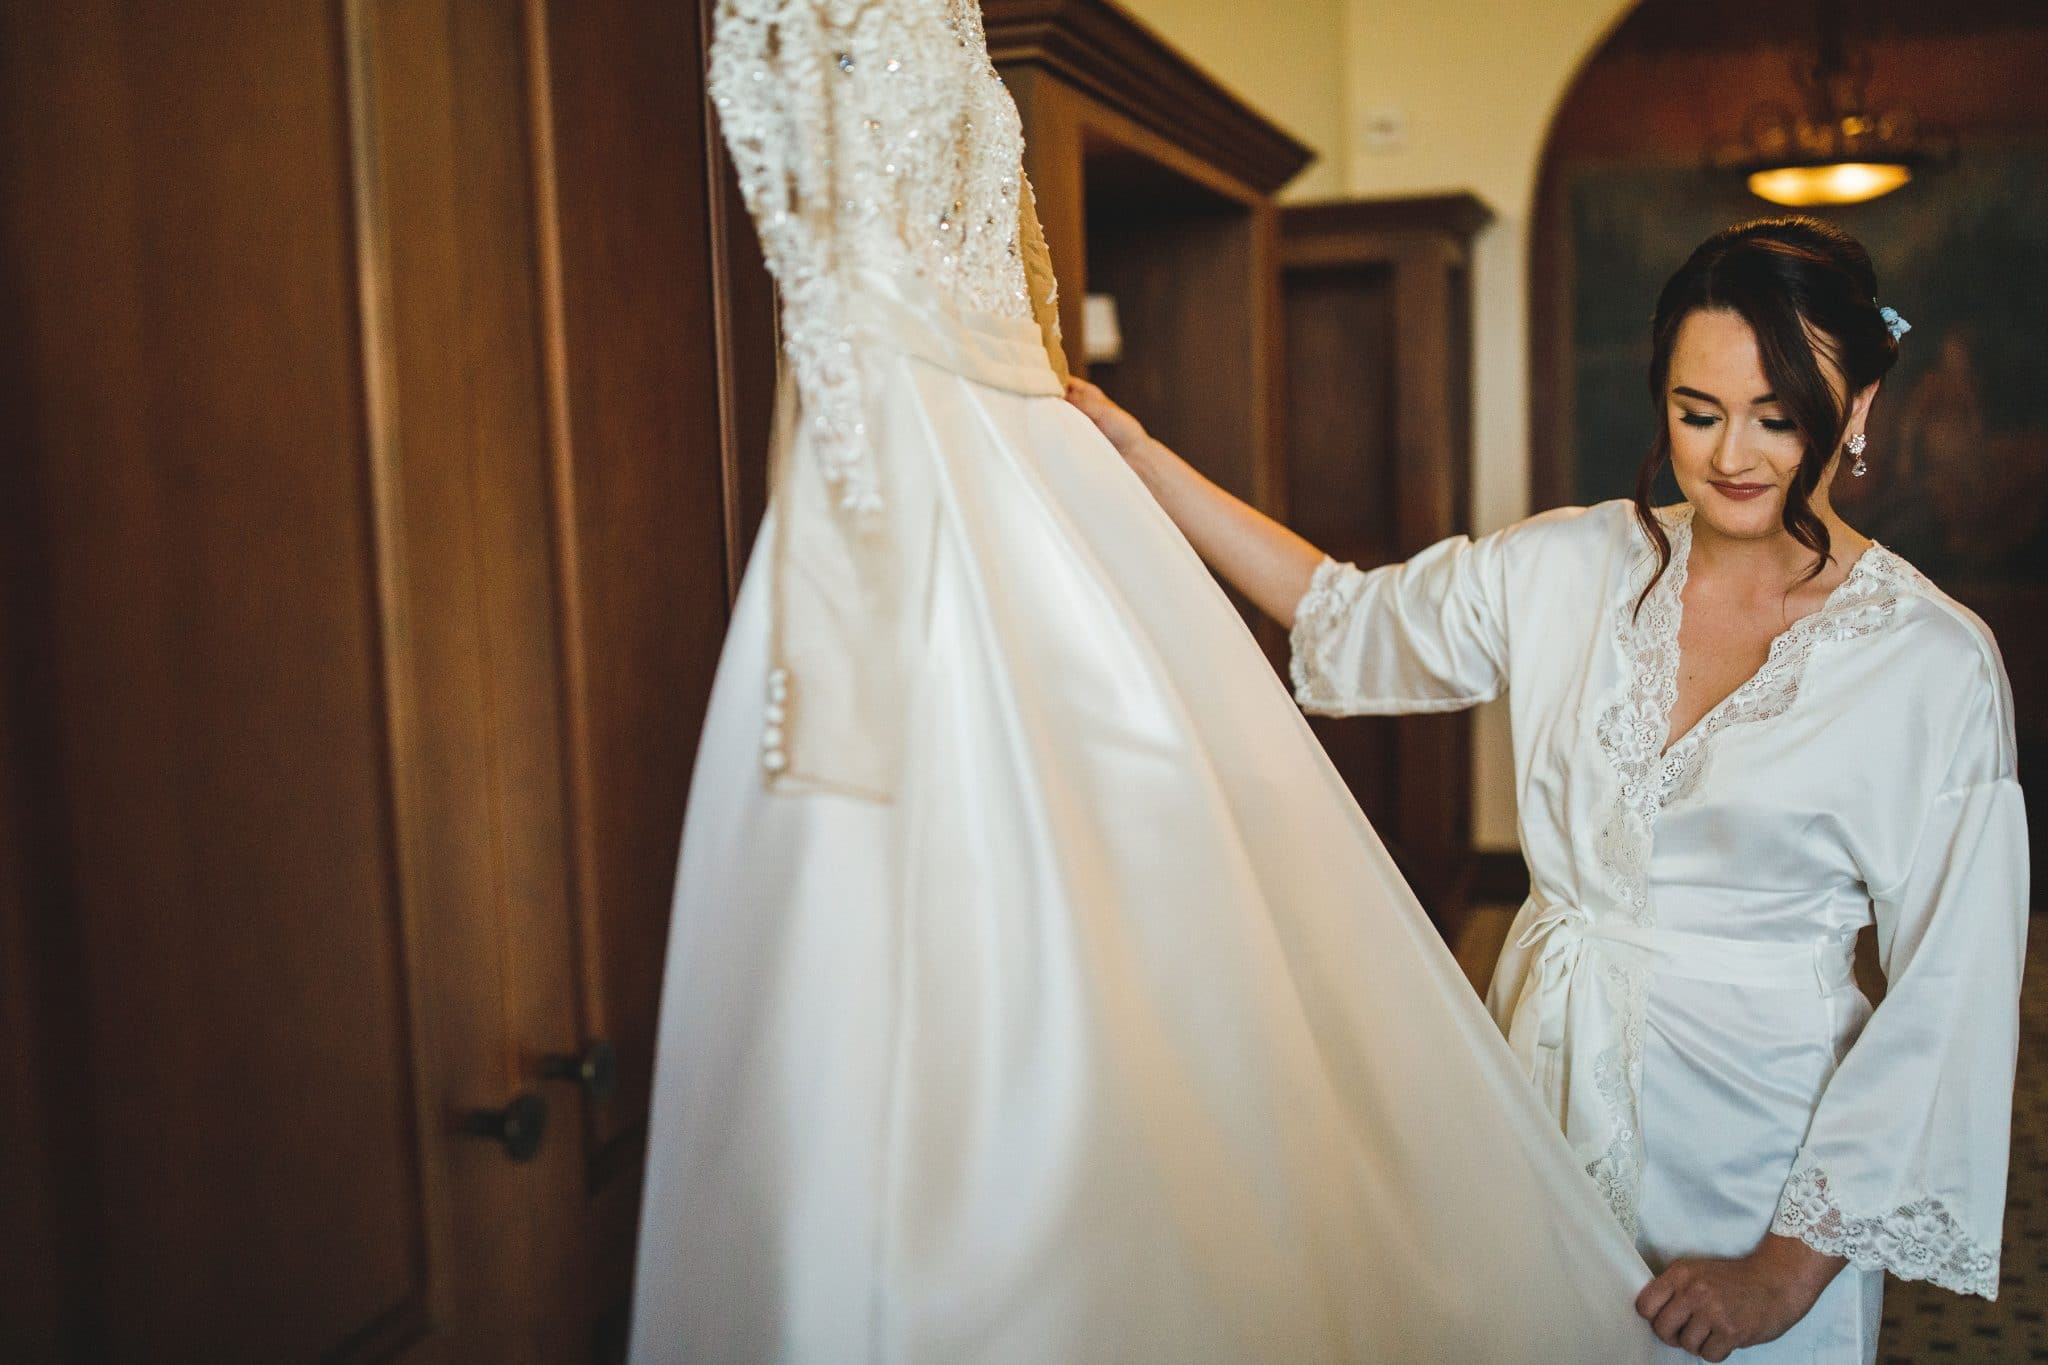 A bride admires her wedding dress.